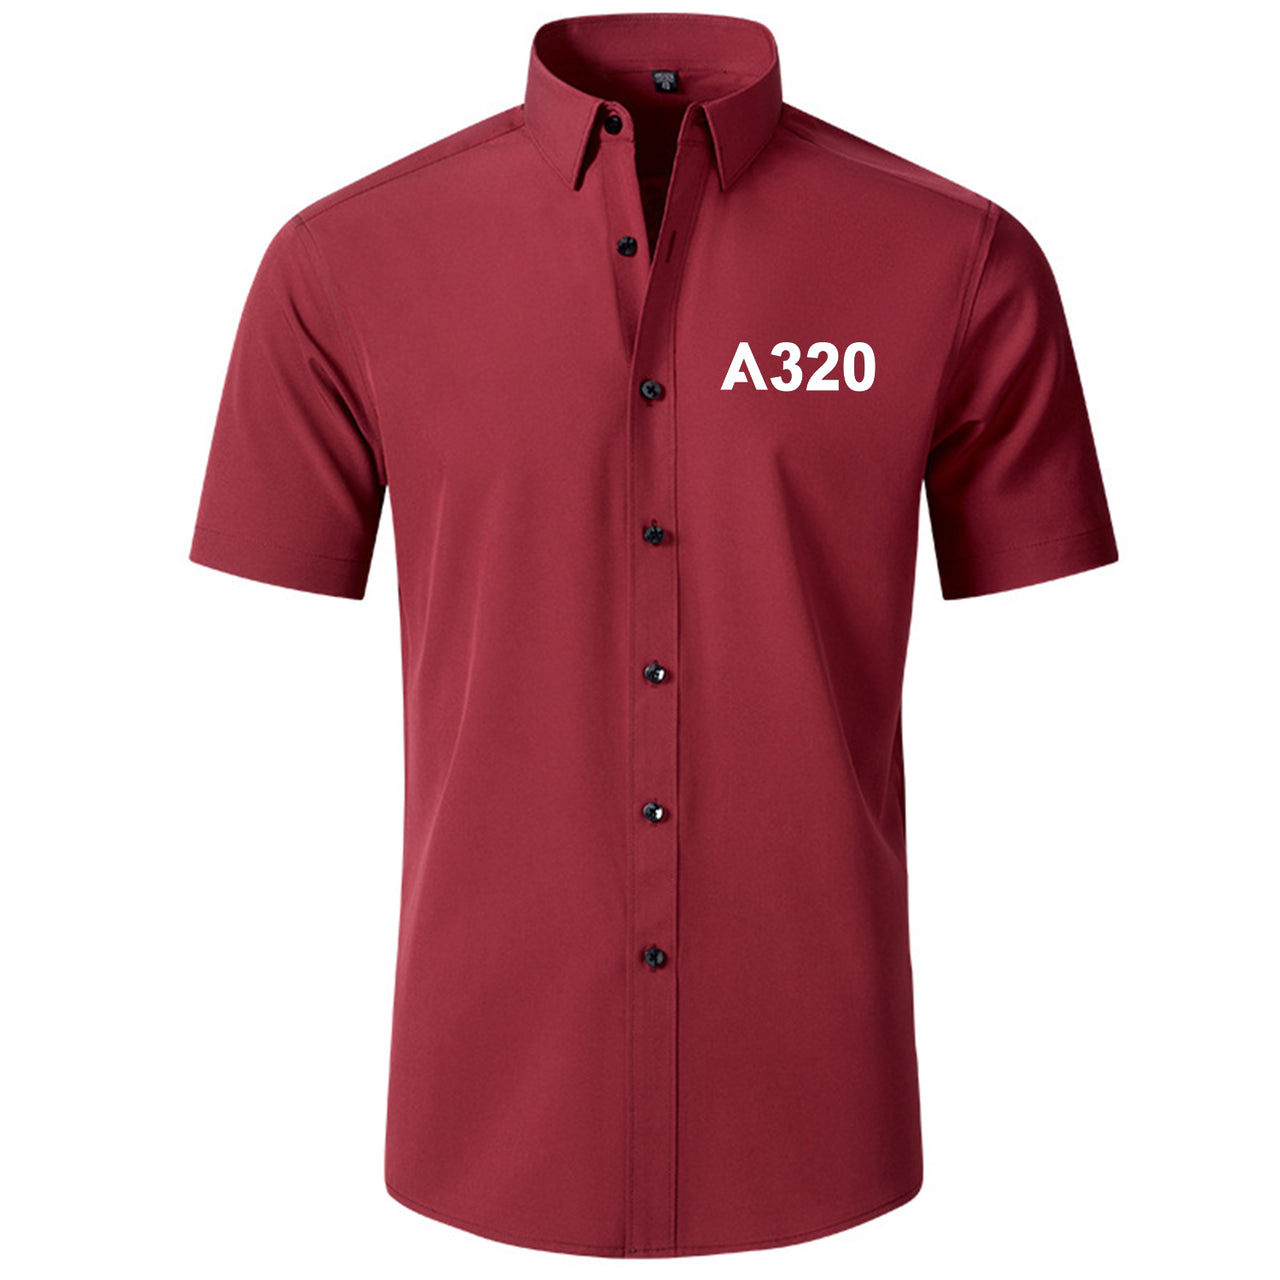 A320 Flat Text Designed Short Sleeve Shirts